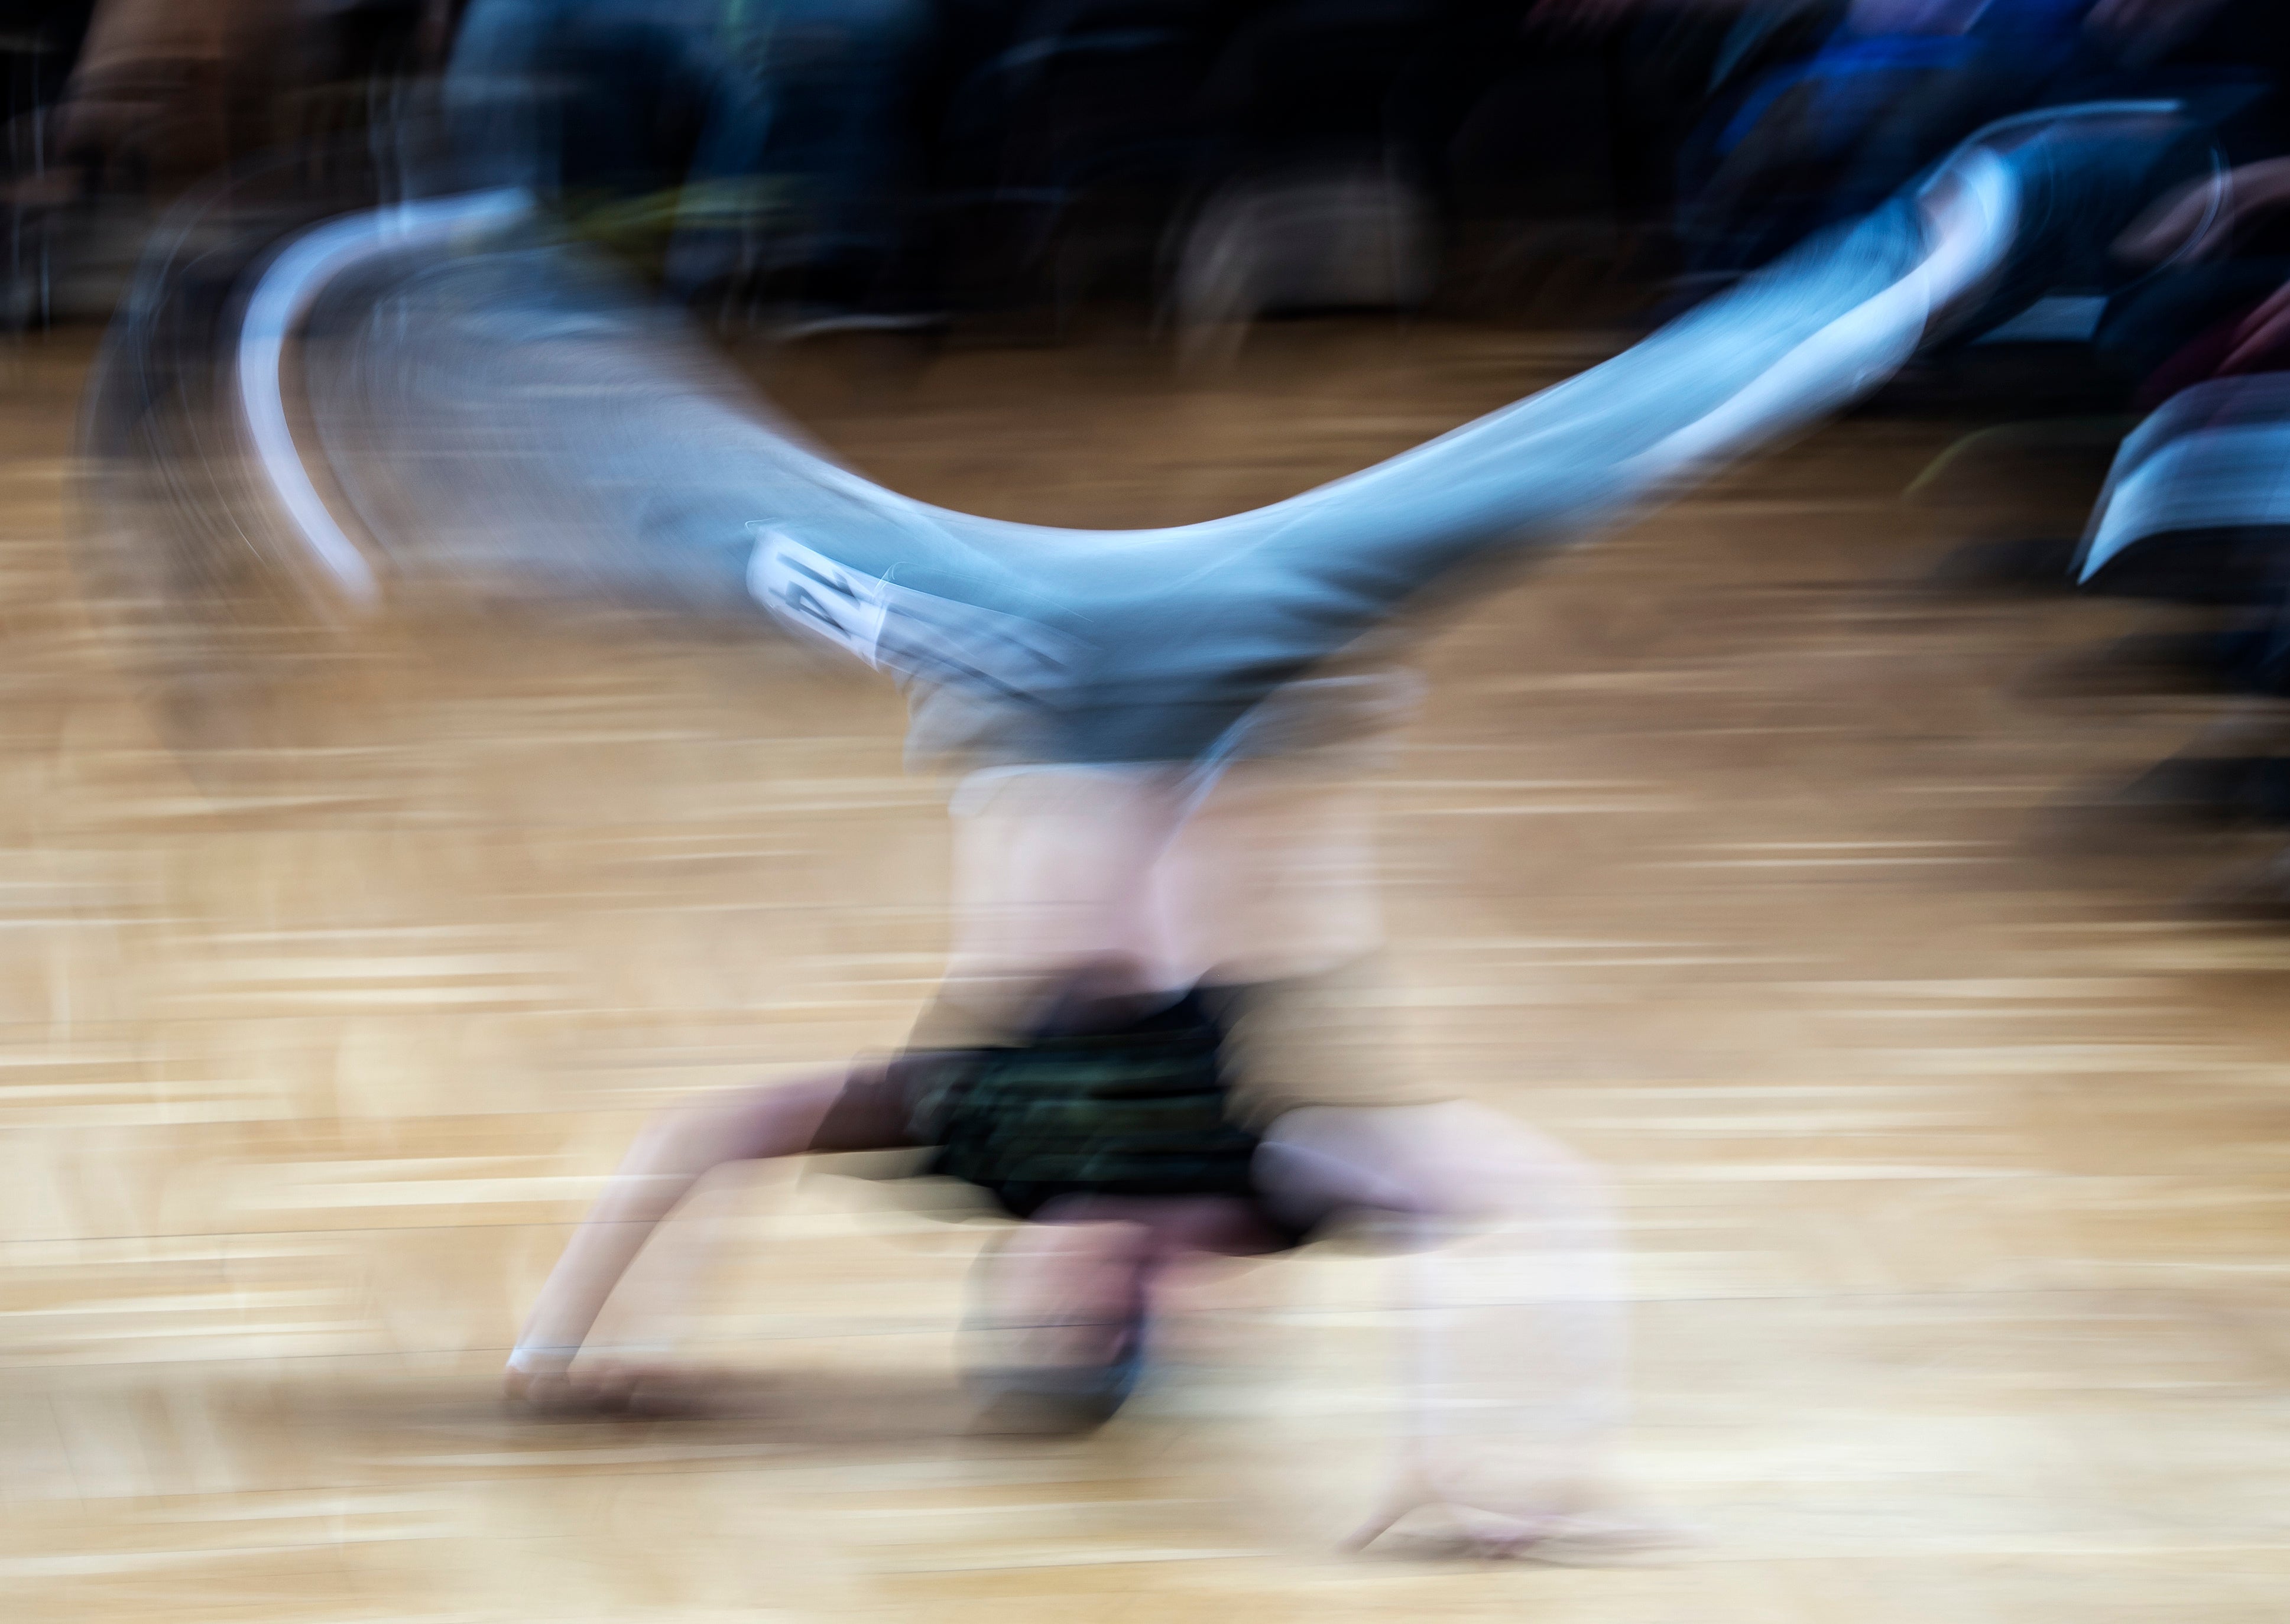 Breakdancing gets Olympic status to debut at Paris in 2024